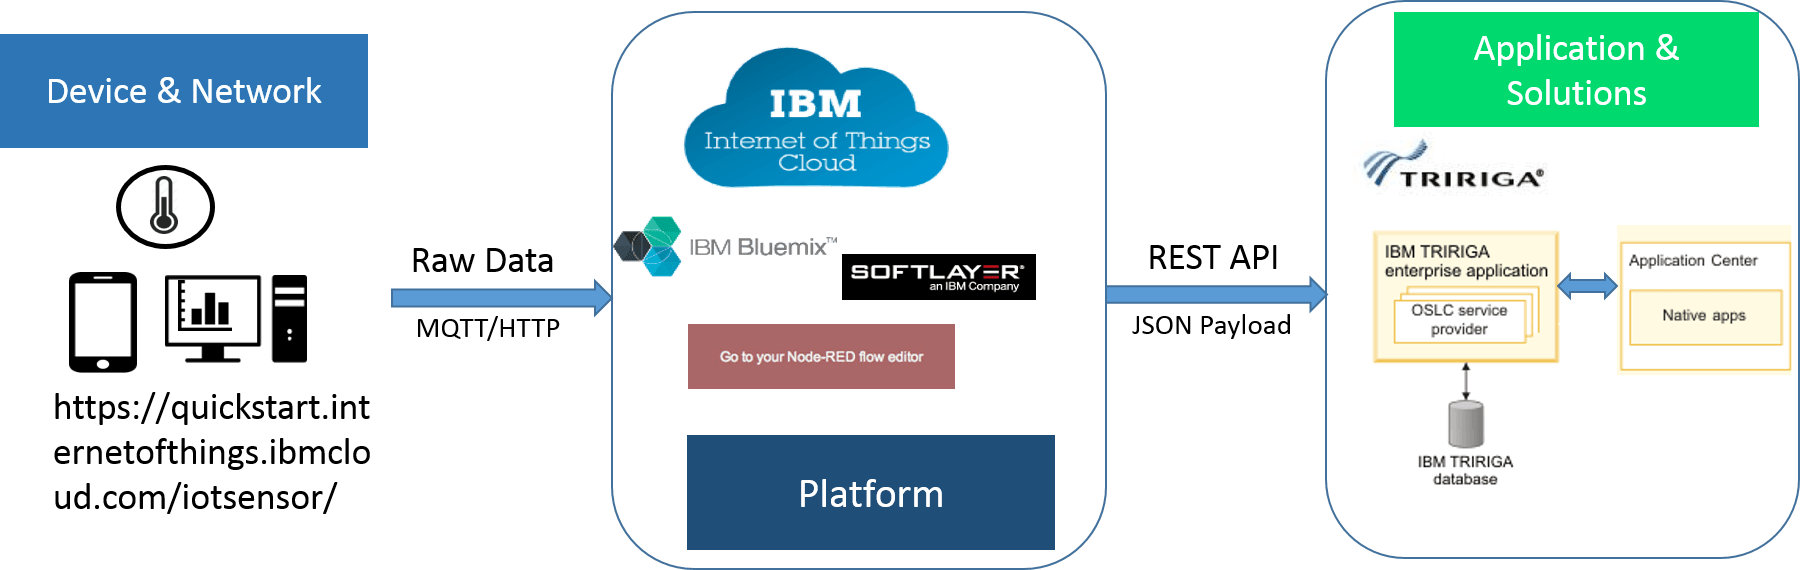 TRIRIGA Logo - Work Order Creation using Watson IoT Platform and TRIRIGA REST API